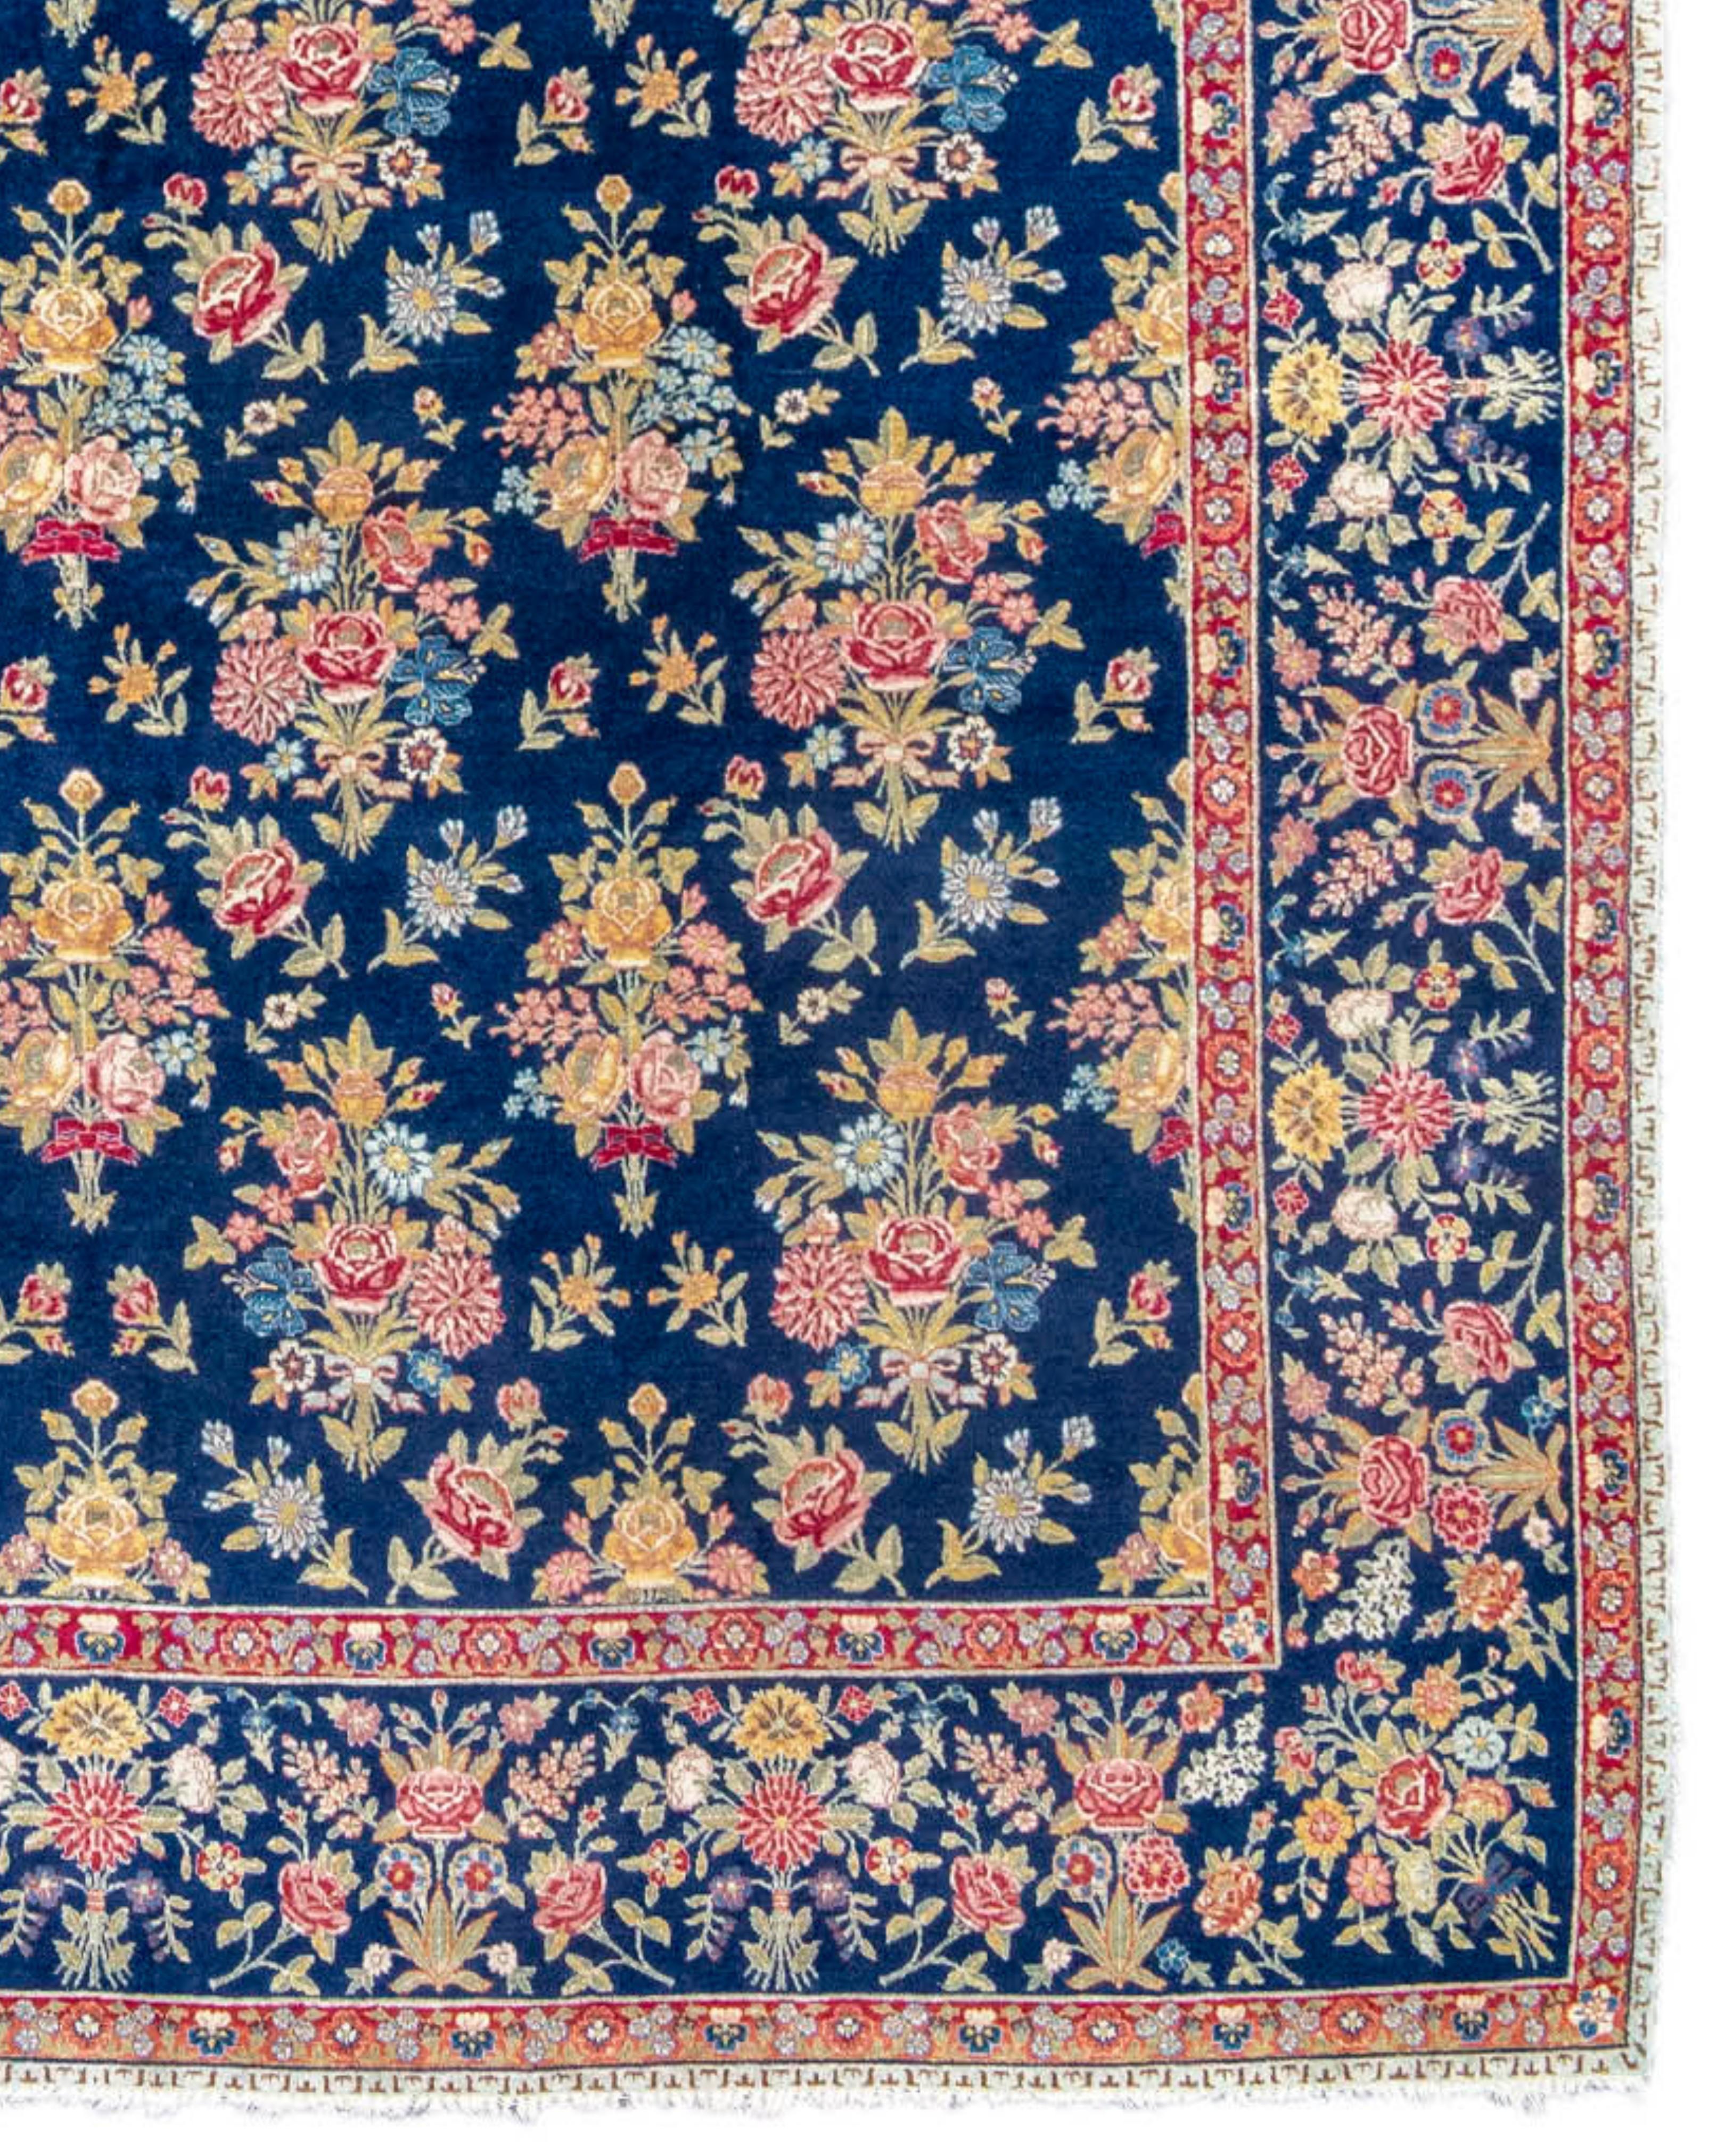 Antique Persian Floral Tabriz Carpet, c. 1900

Additional Information:
Dimensions: 9'3